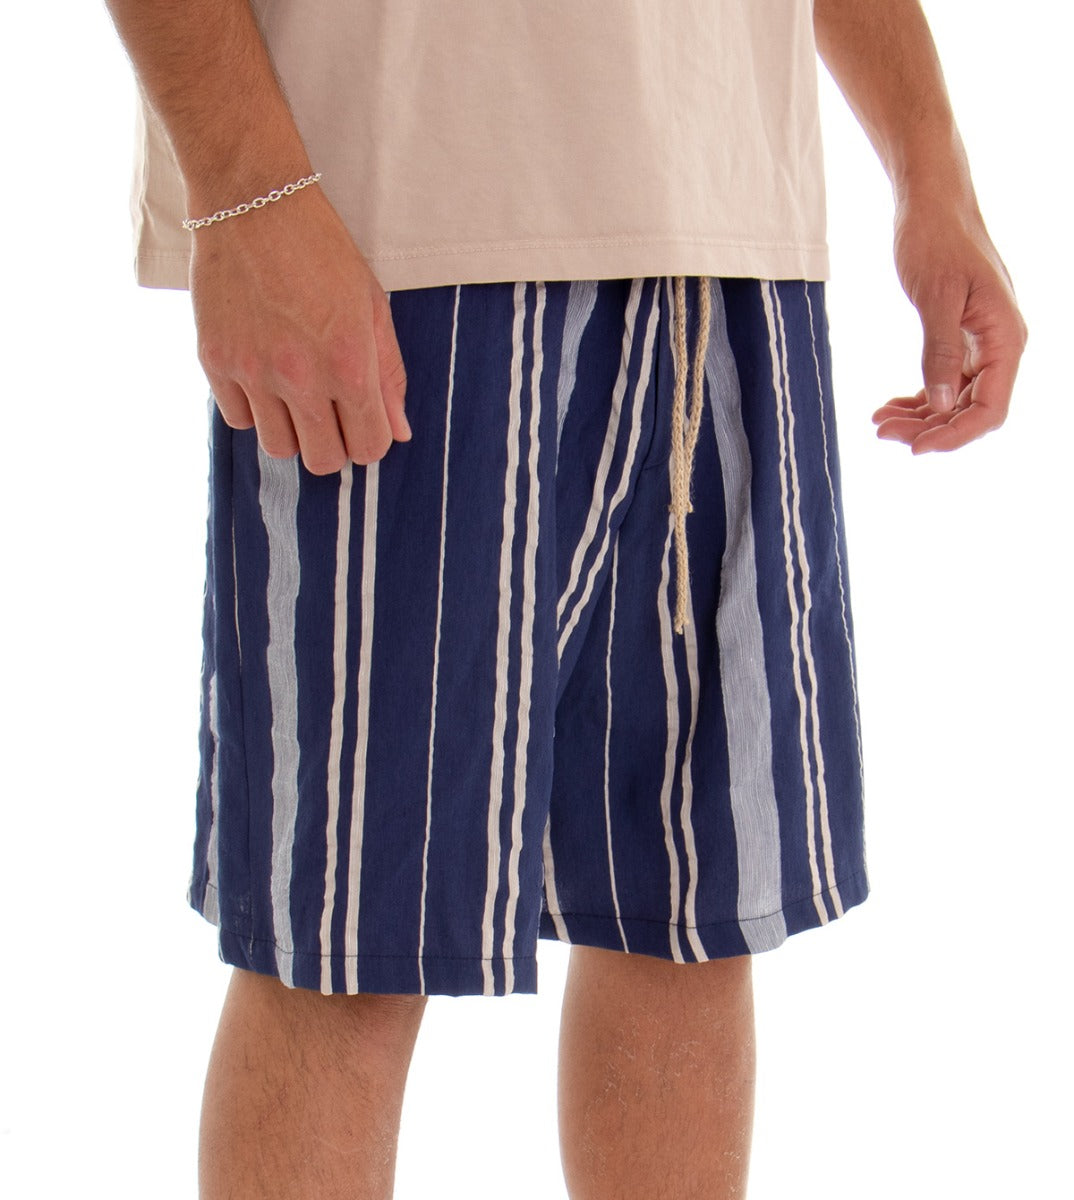 Bermuda Pantaloncino Uomo Shorts Rigato Blu Elastico GIOSAL-PC1544A